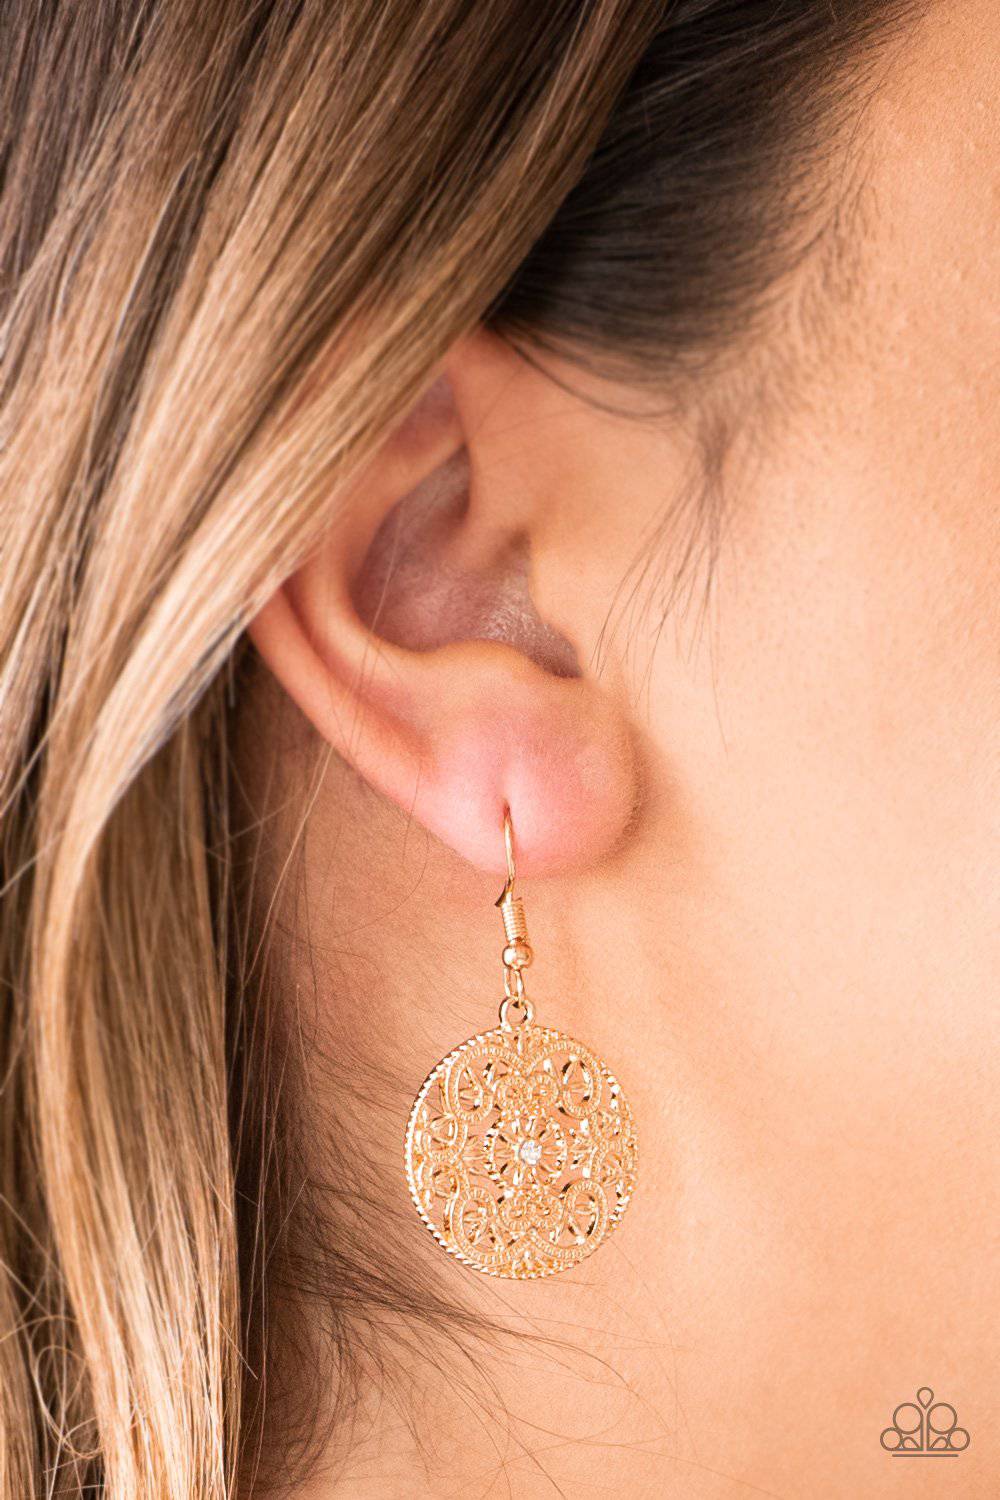 Rochester Royale - Gold Rhinestone Earrings - Paparazzi Accessories - GlaMarous Titi Jewels